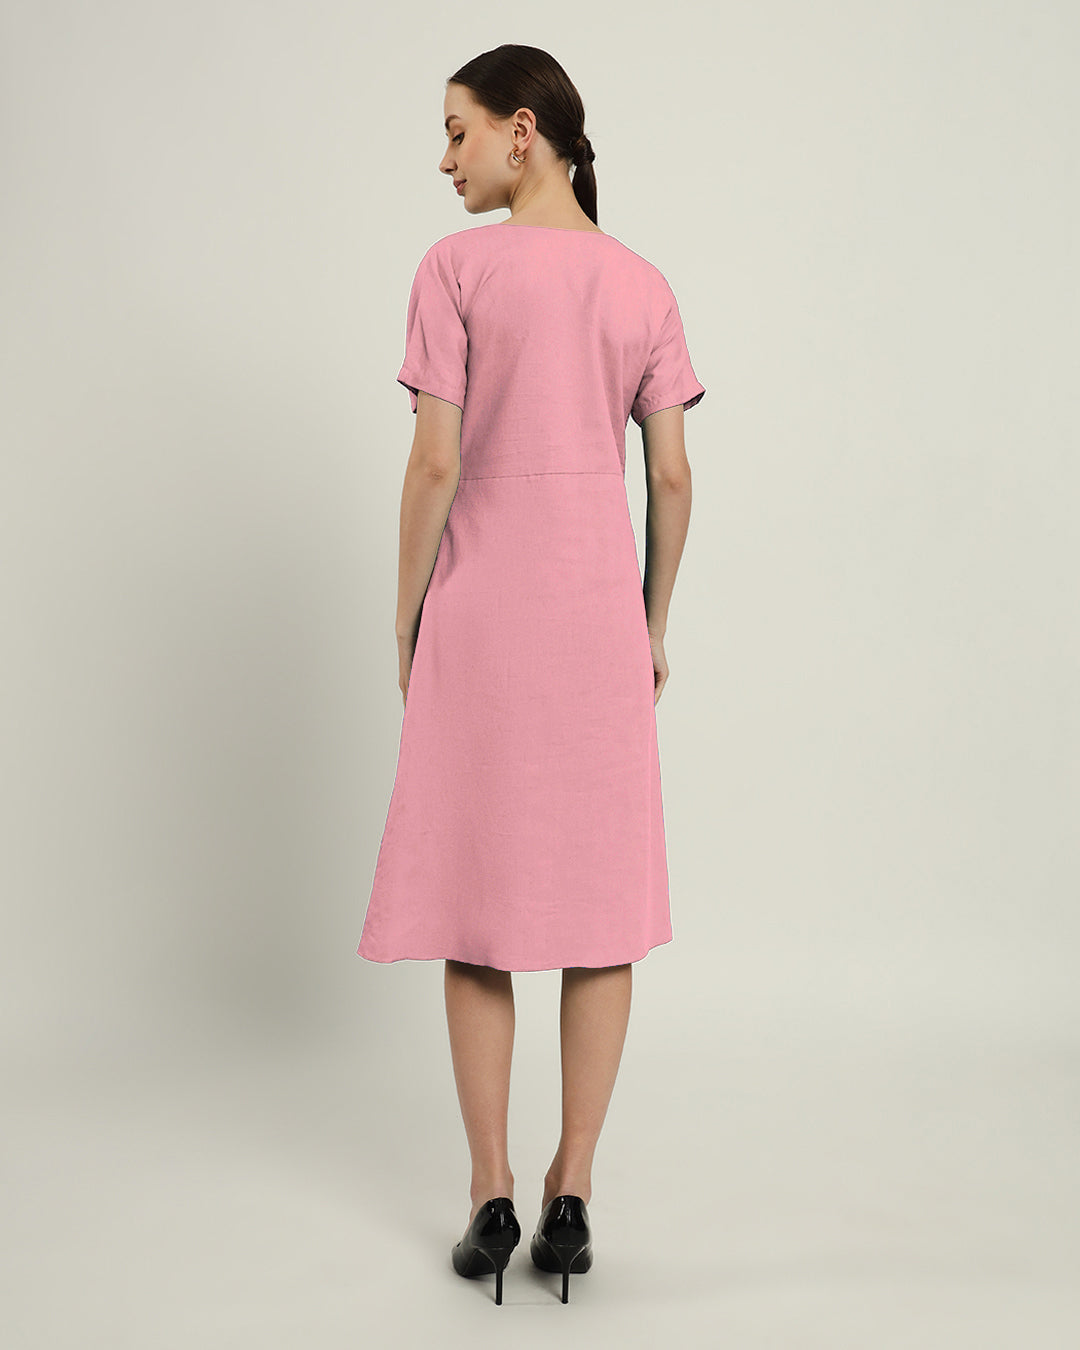 The Memphis Fondant Pink Cotton Dress